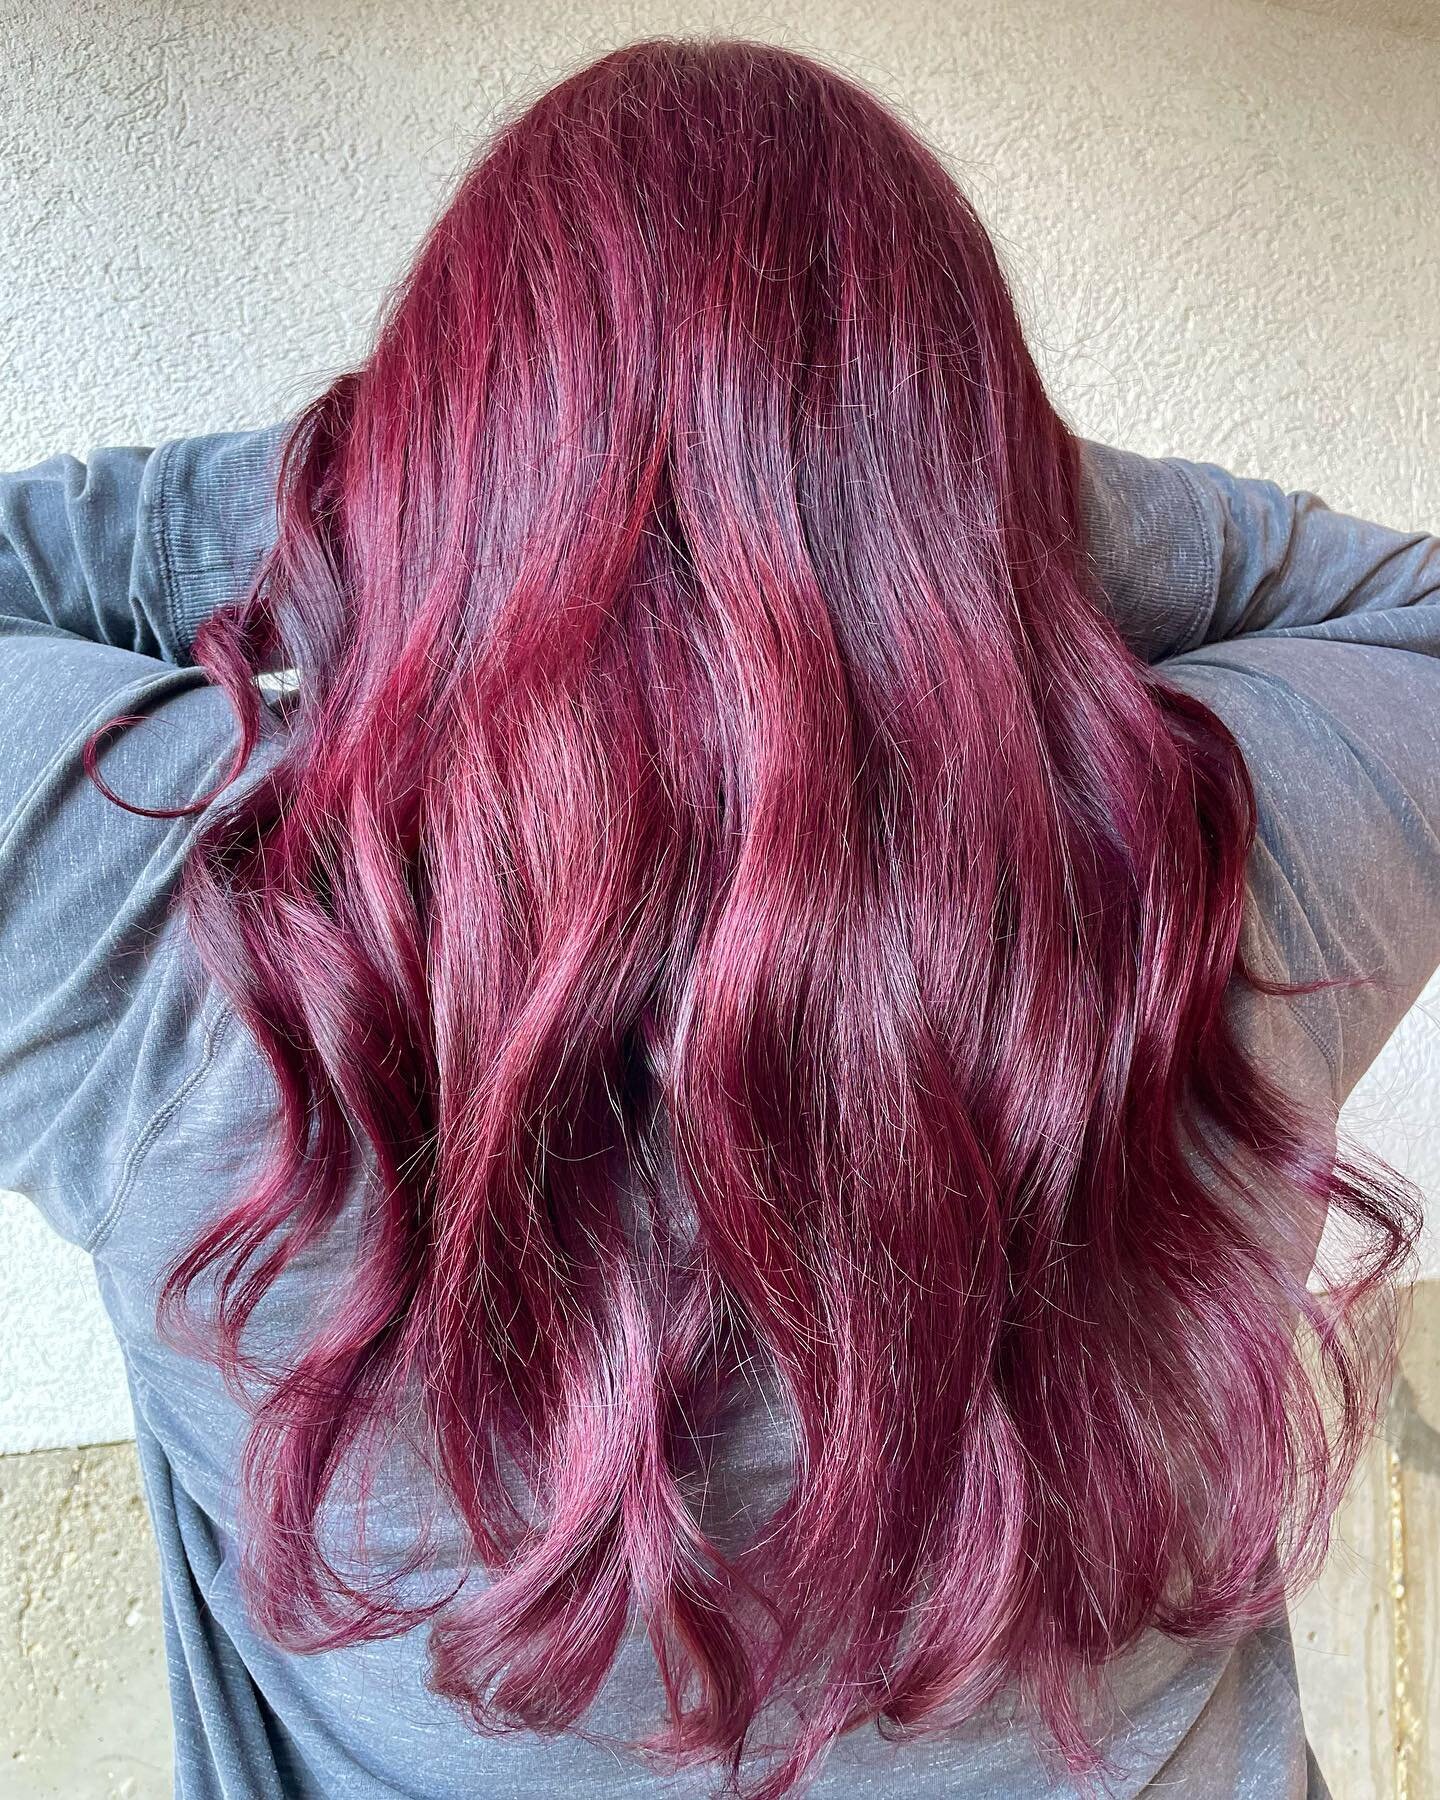 Raspberry violet 🫶🏼
#HBK #HairByKimberlyKoster